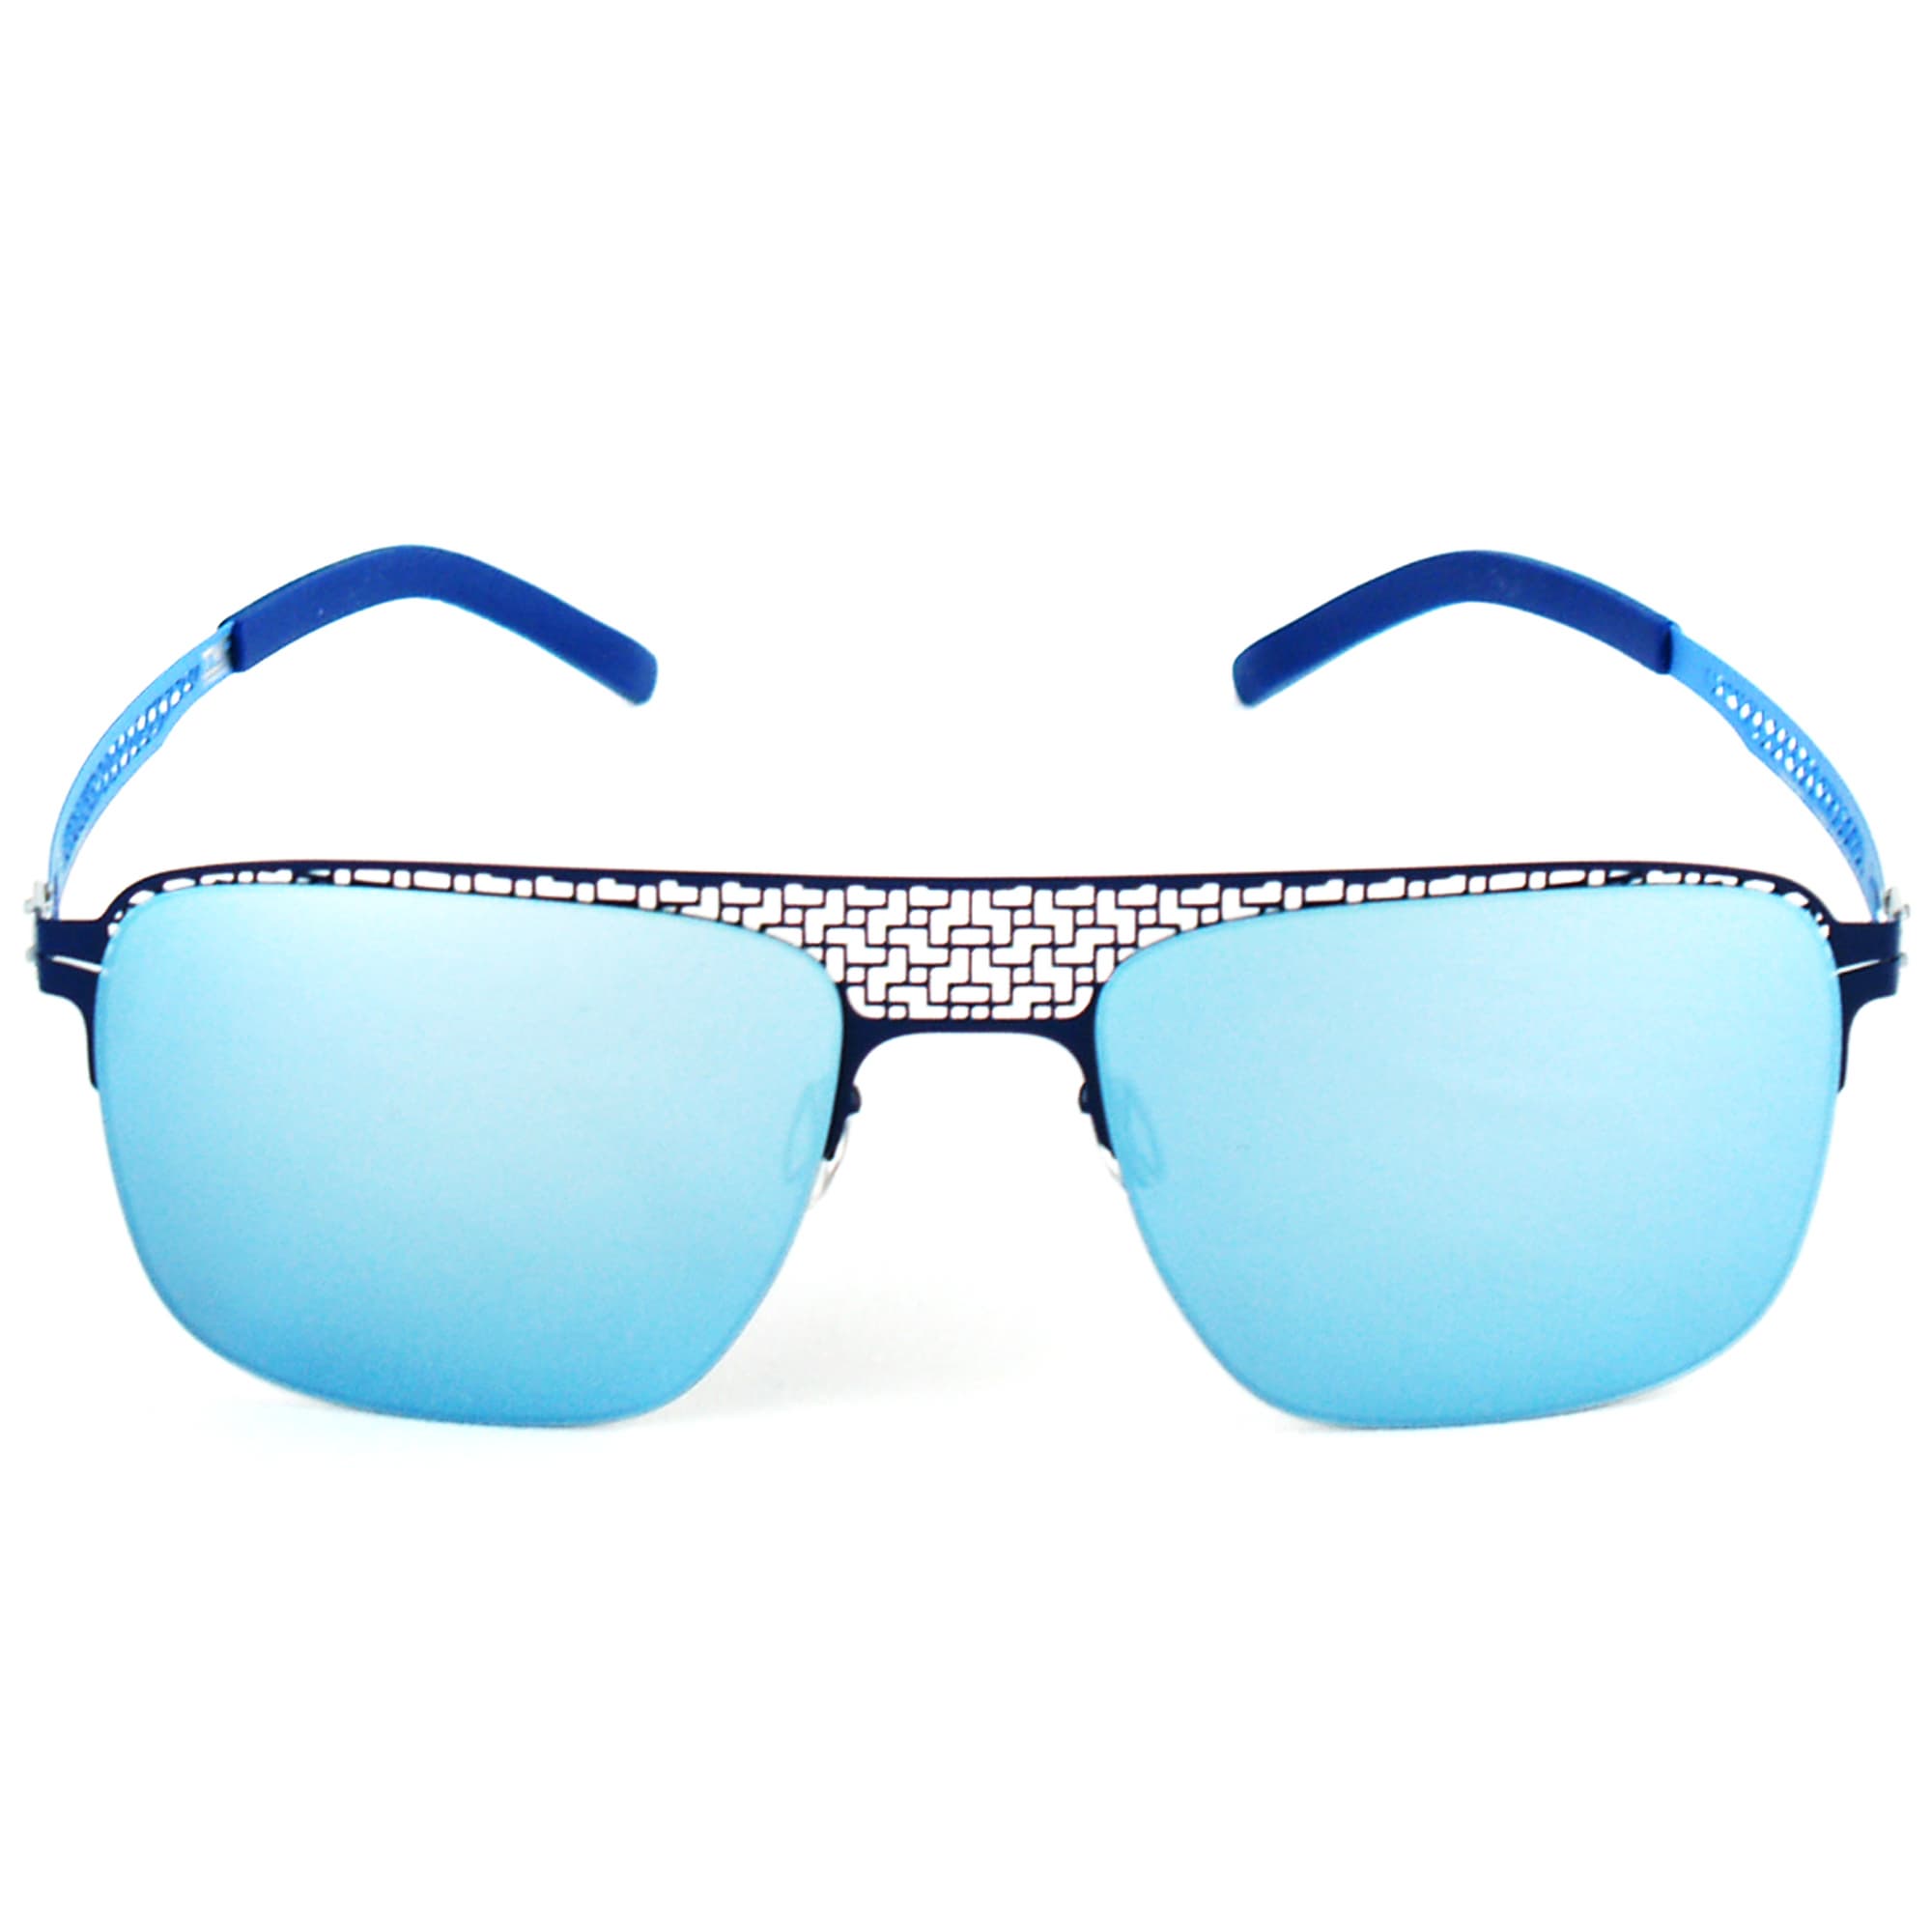 FigureII  Squared  Thin Stainless Steel  Frame Sunglasses